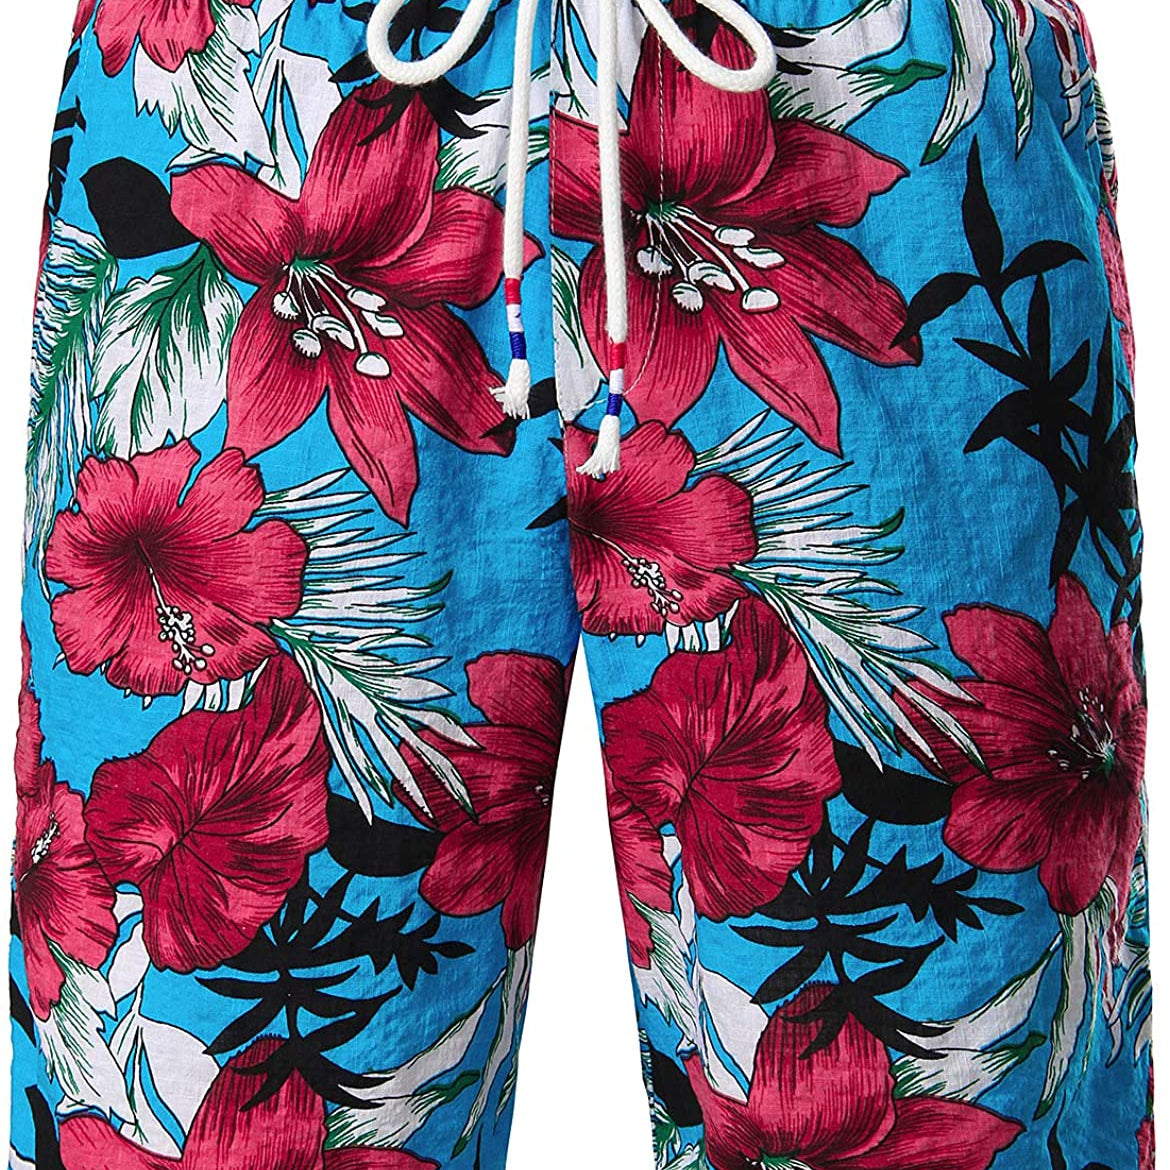 Men's Hawaiian Floral Print Casual Cotton Shorts